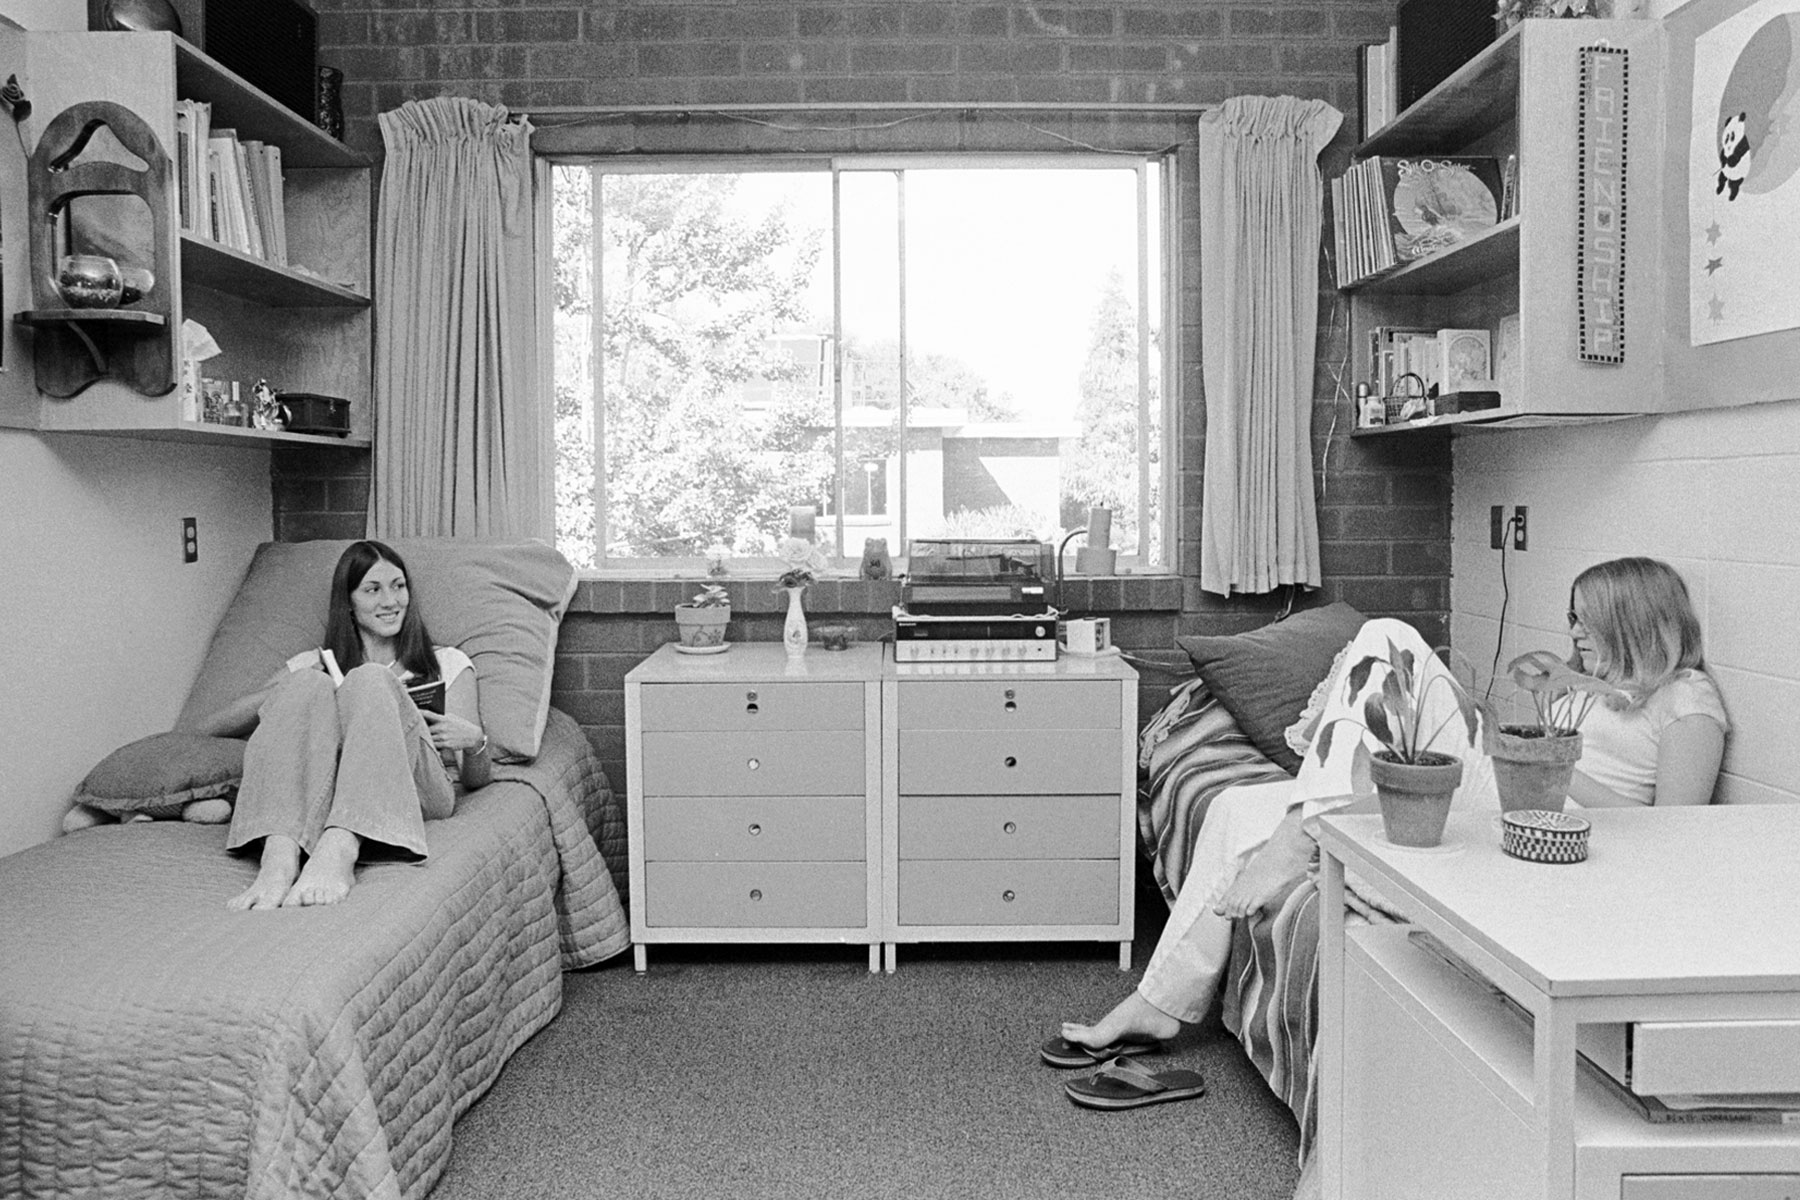 SJSU students at Washburn Hall in the 1970s.